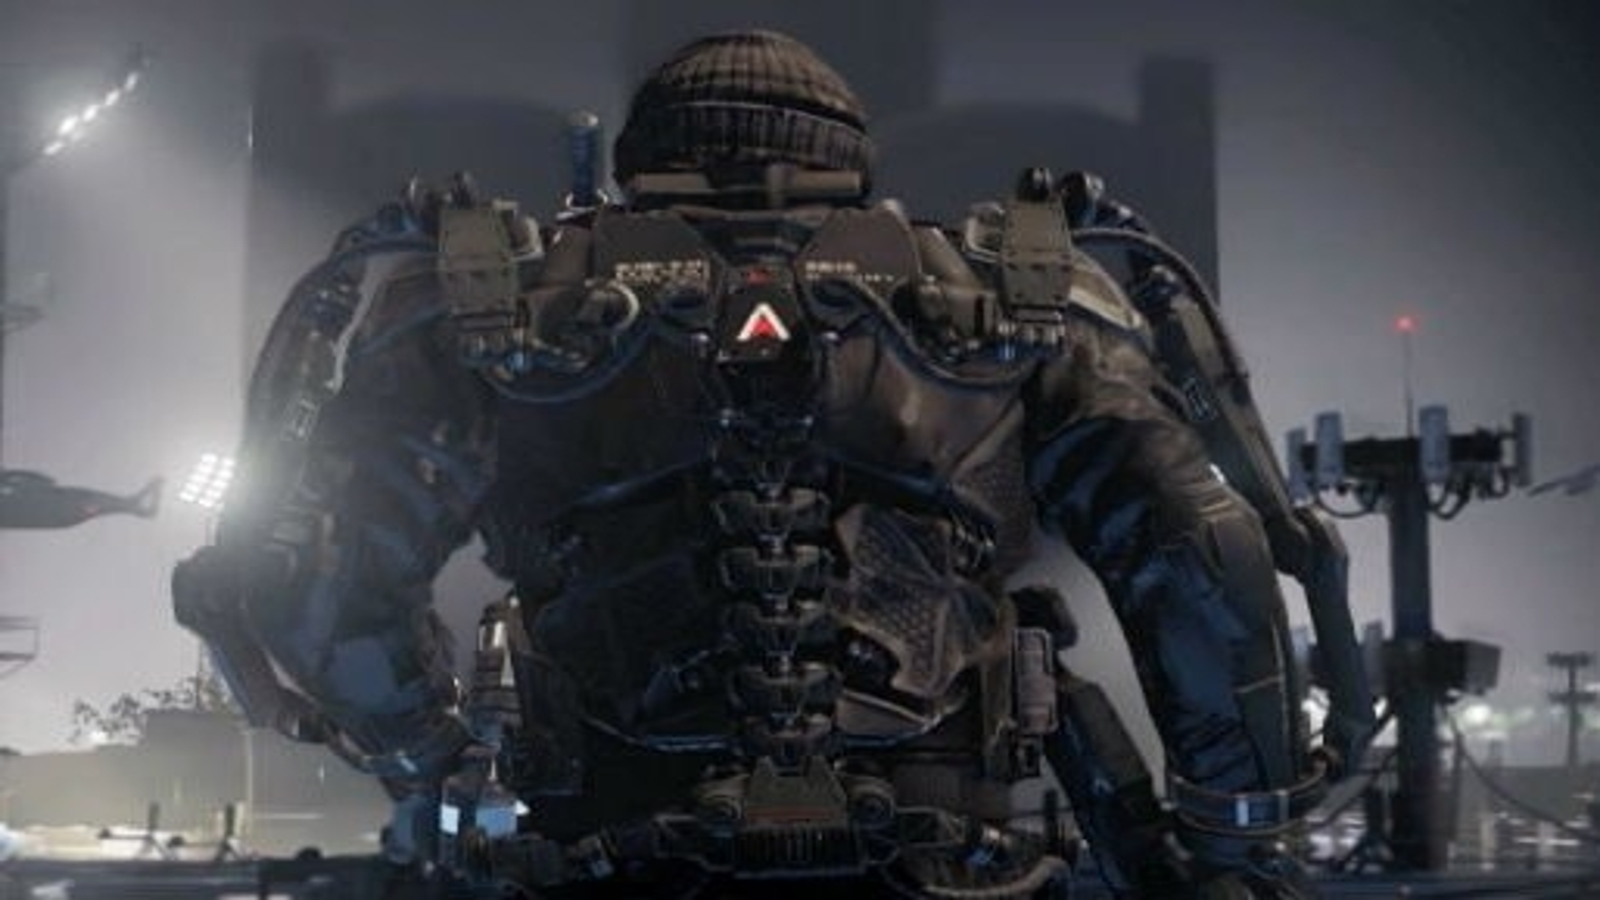 Call of Duty: Advanced Warfare: co-op mode details revealed